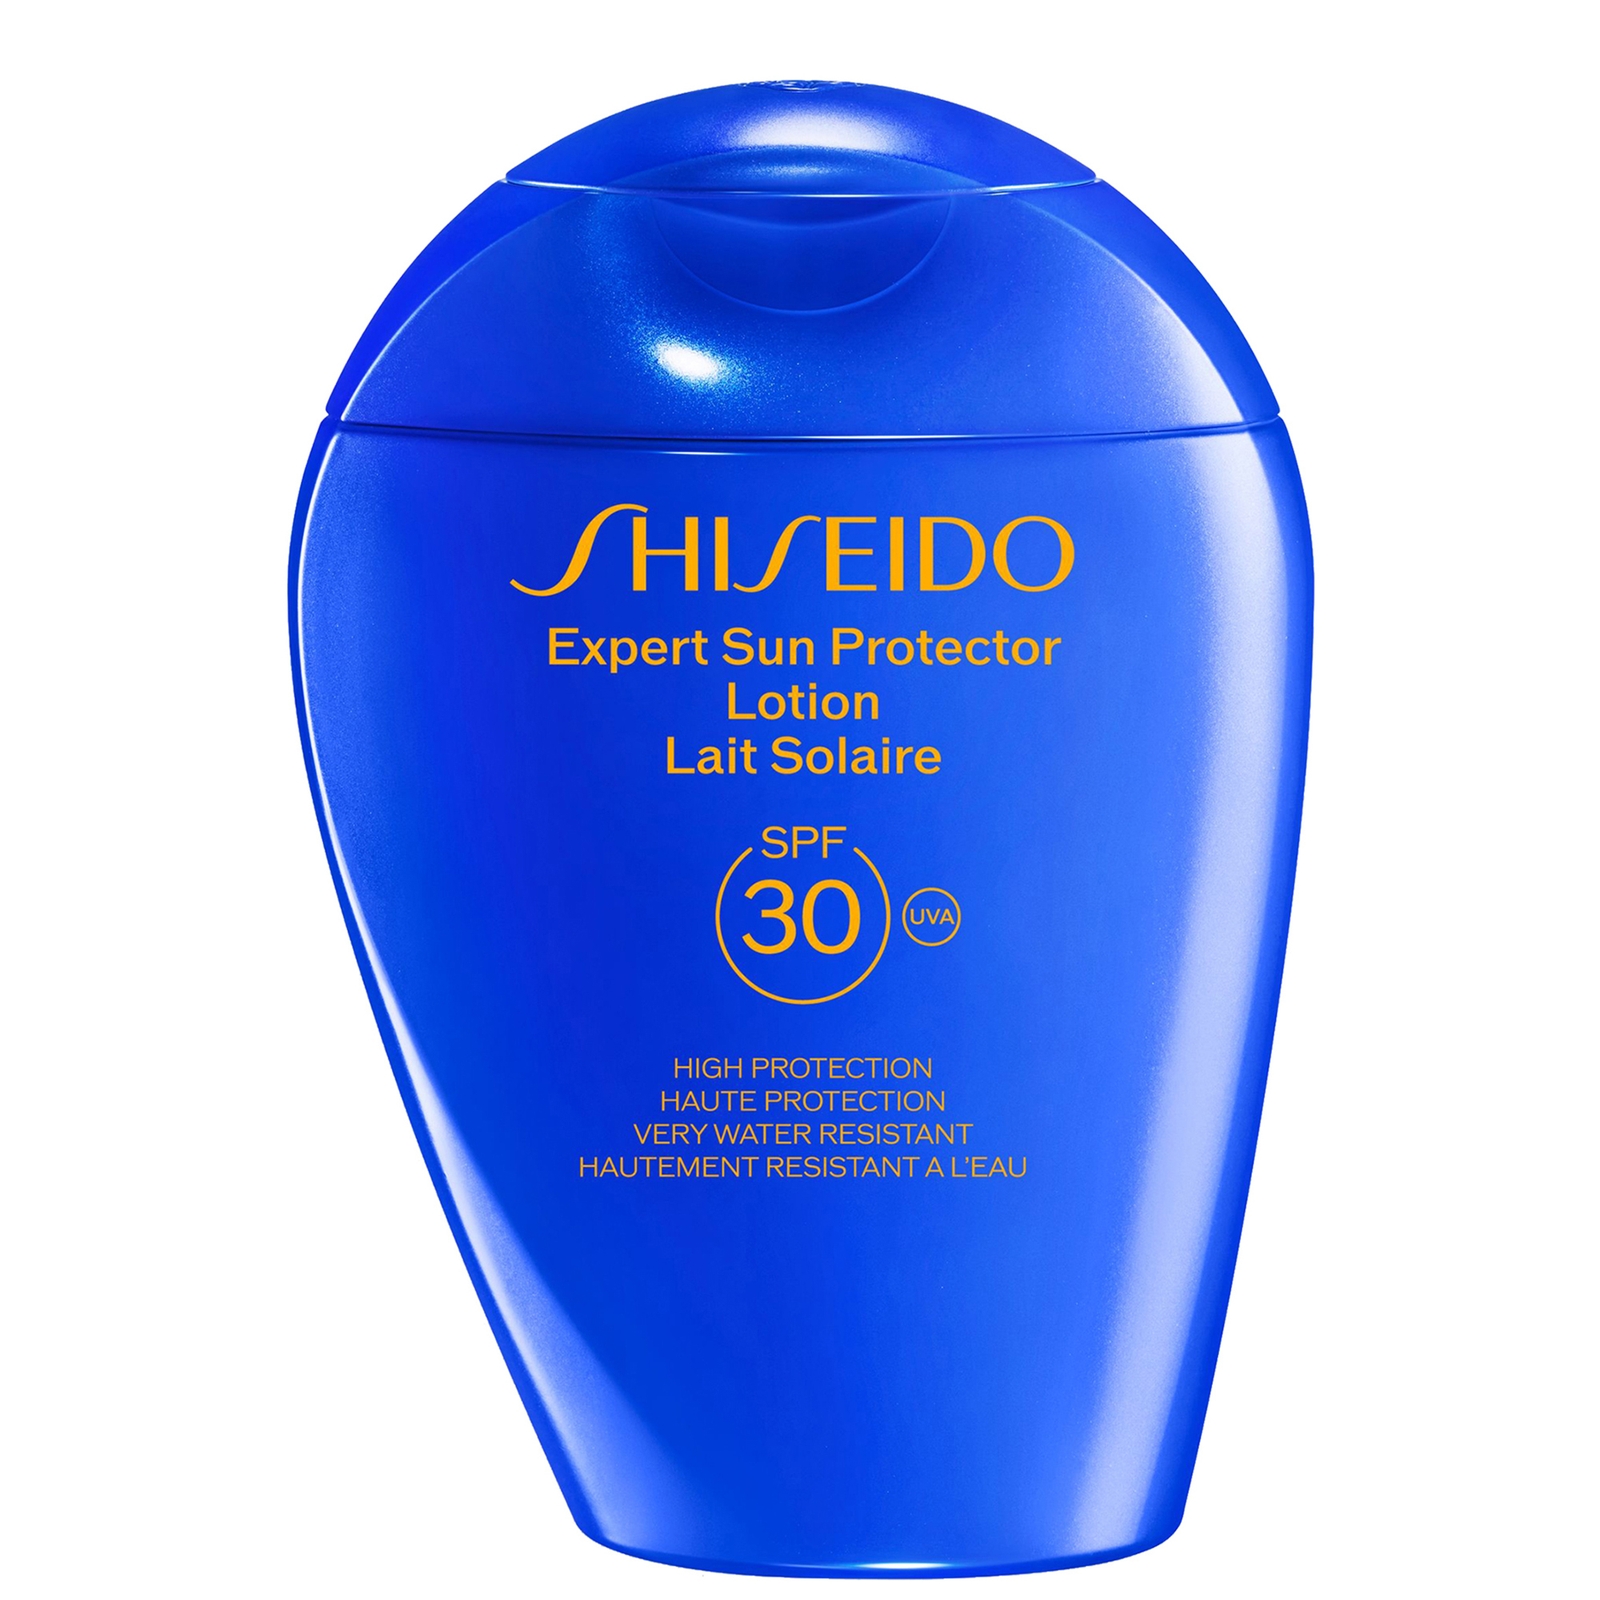 Shiseido Lotion Spf30  - Expert Sun Protector Lotion Spf30